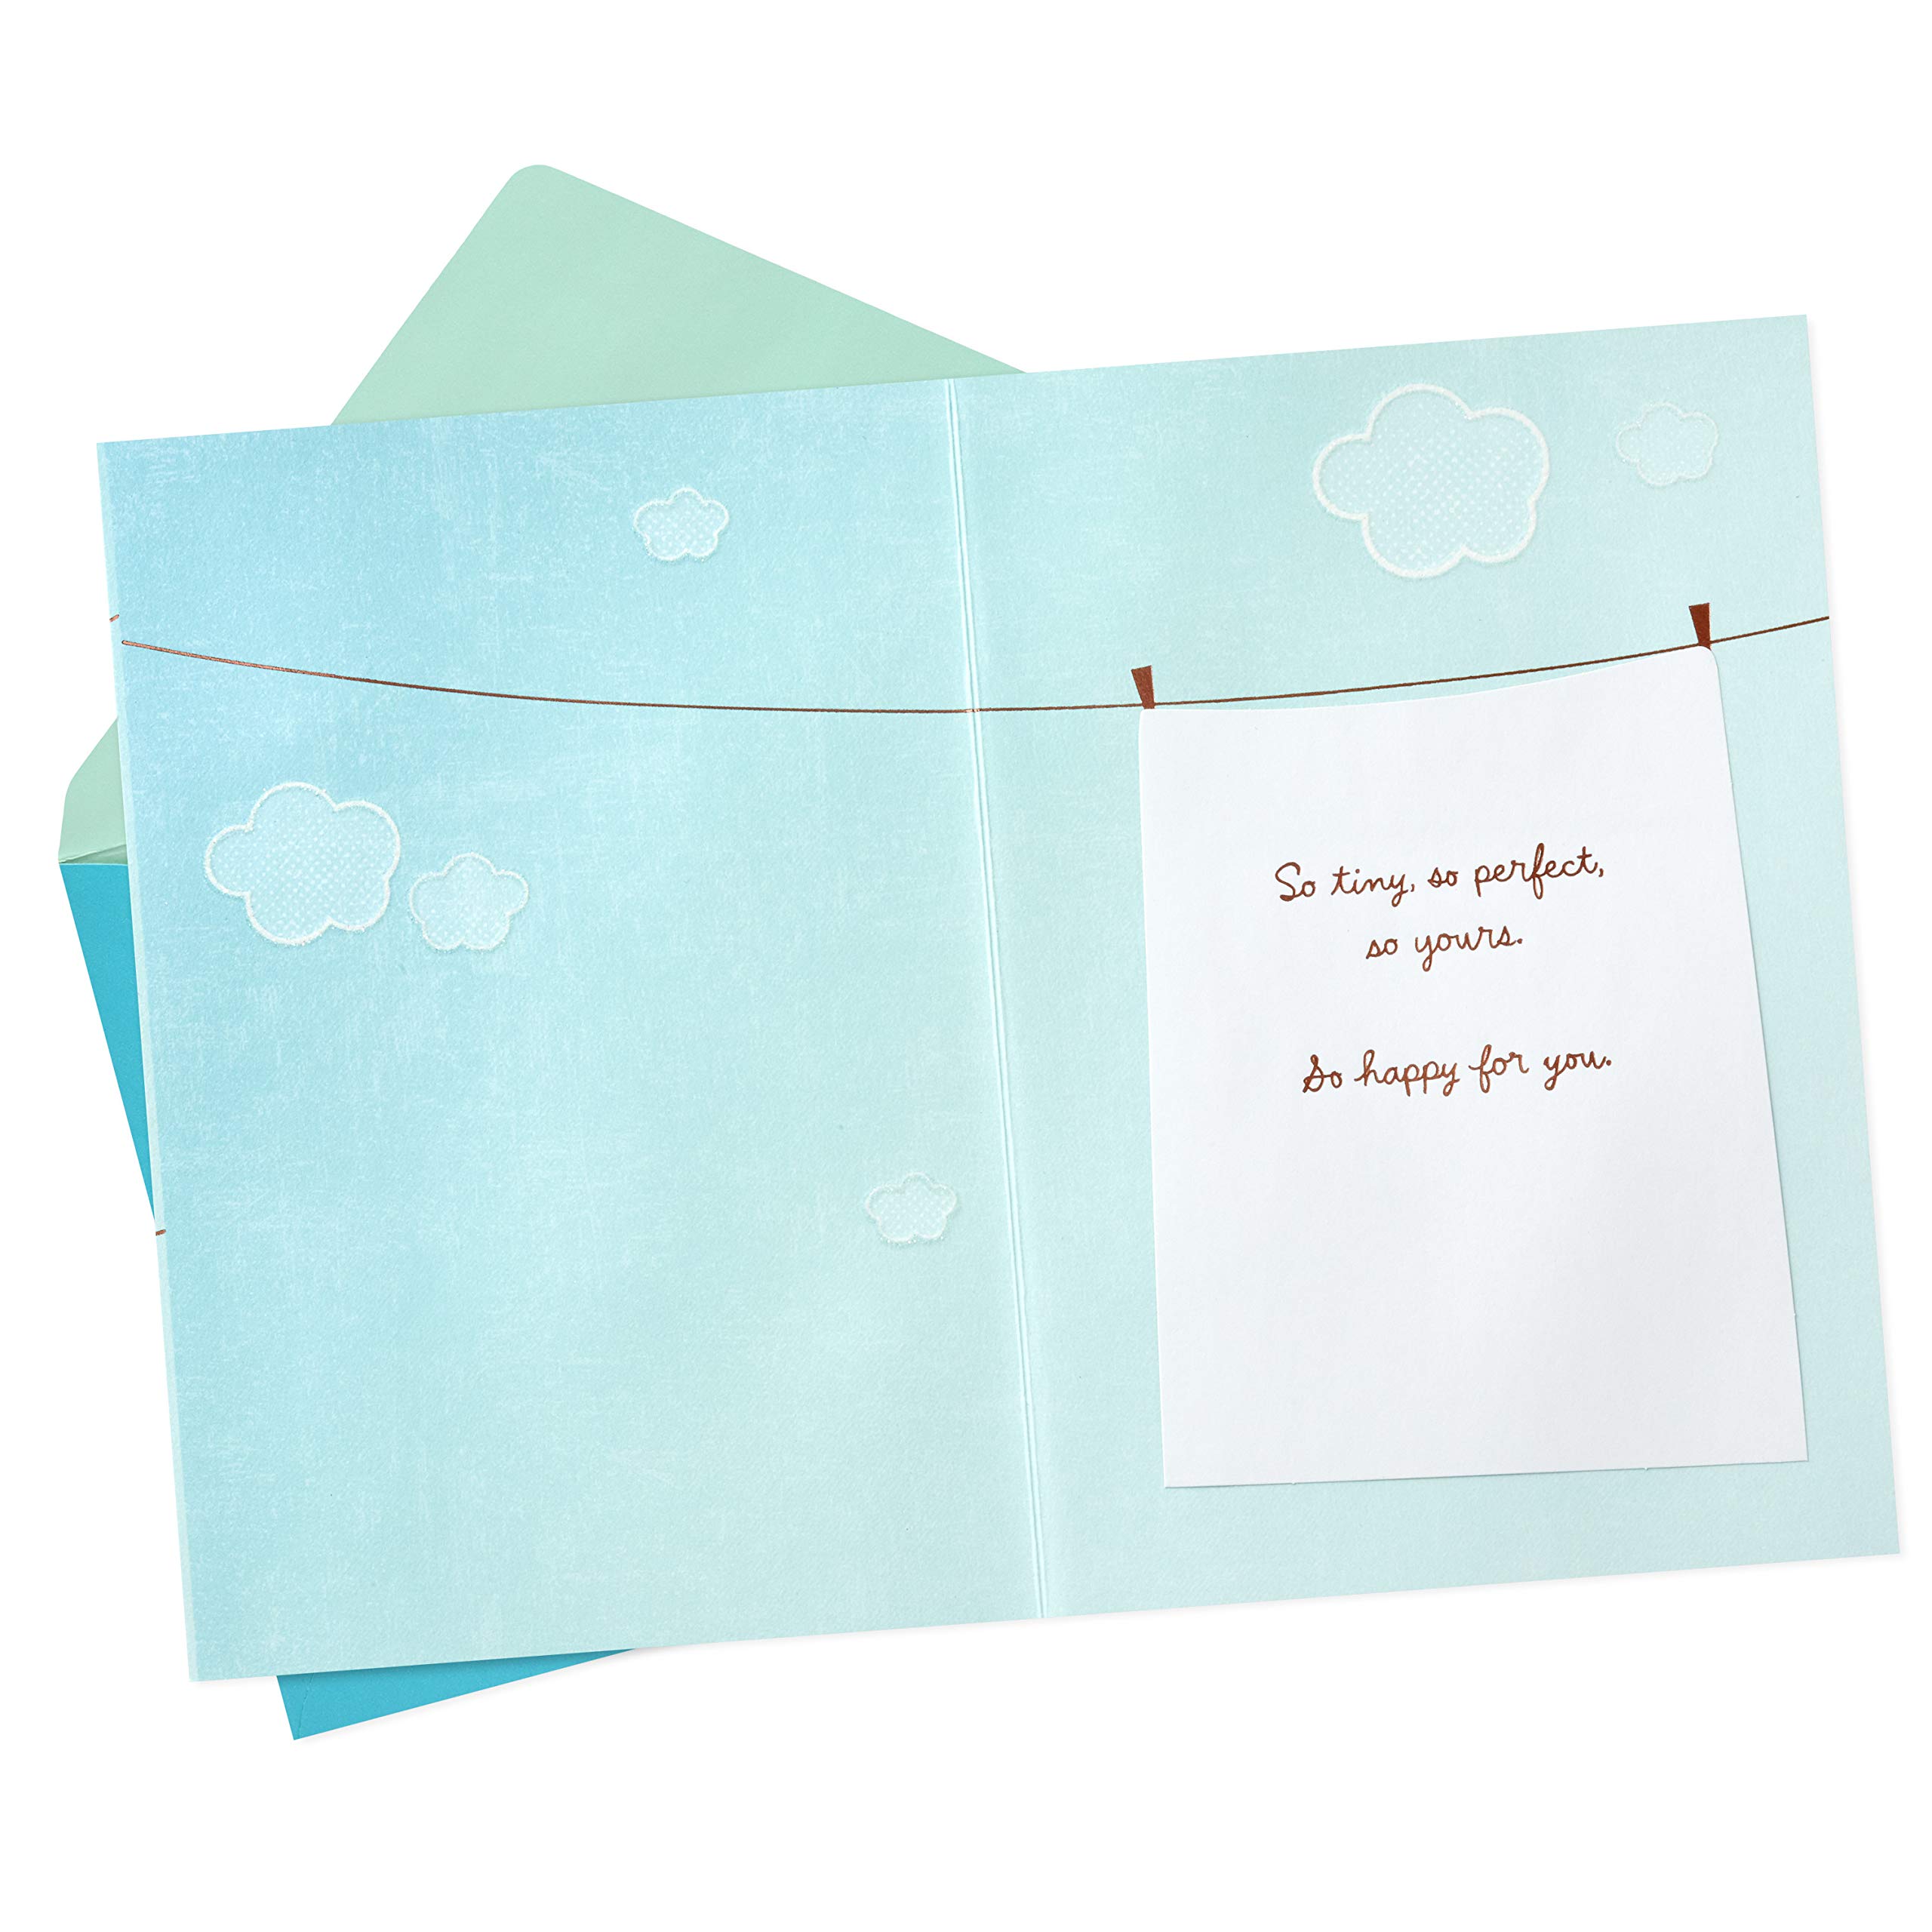 Hallmark Baby Shower Card (Blue, Now This is Cuteness)